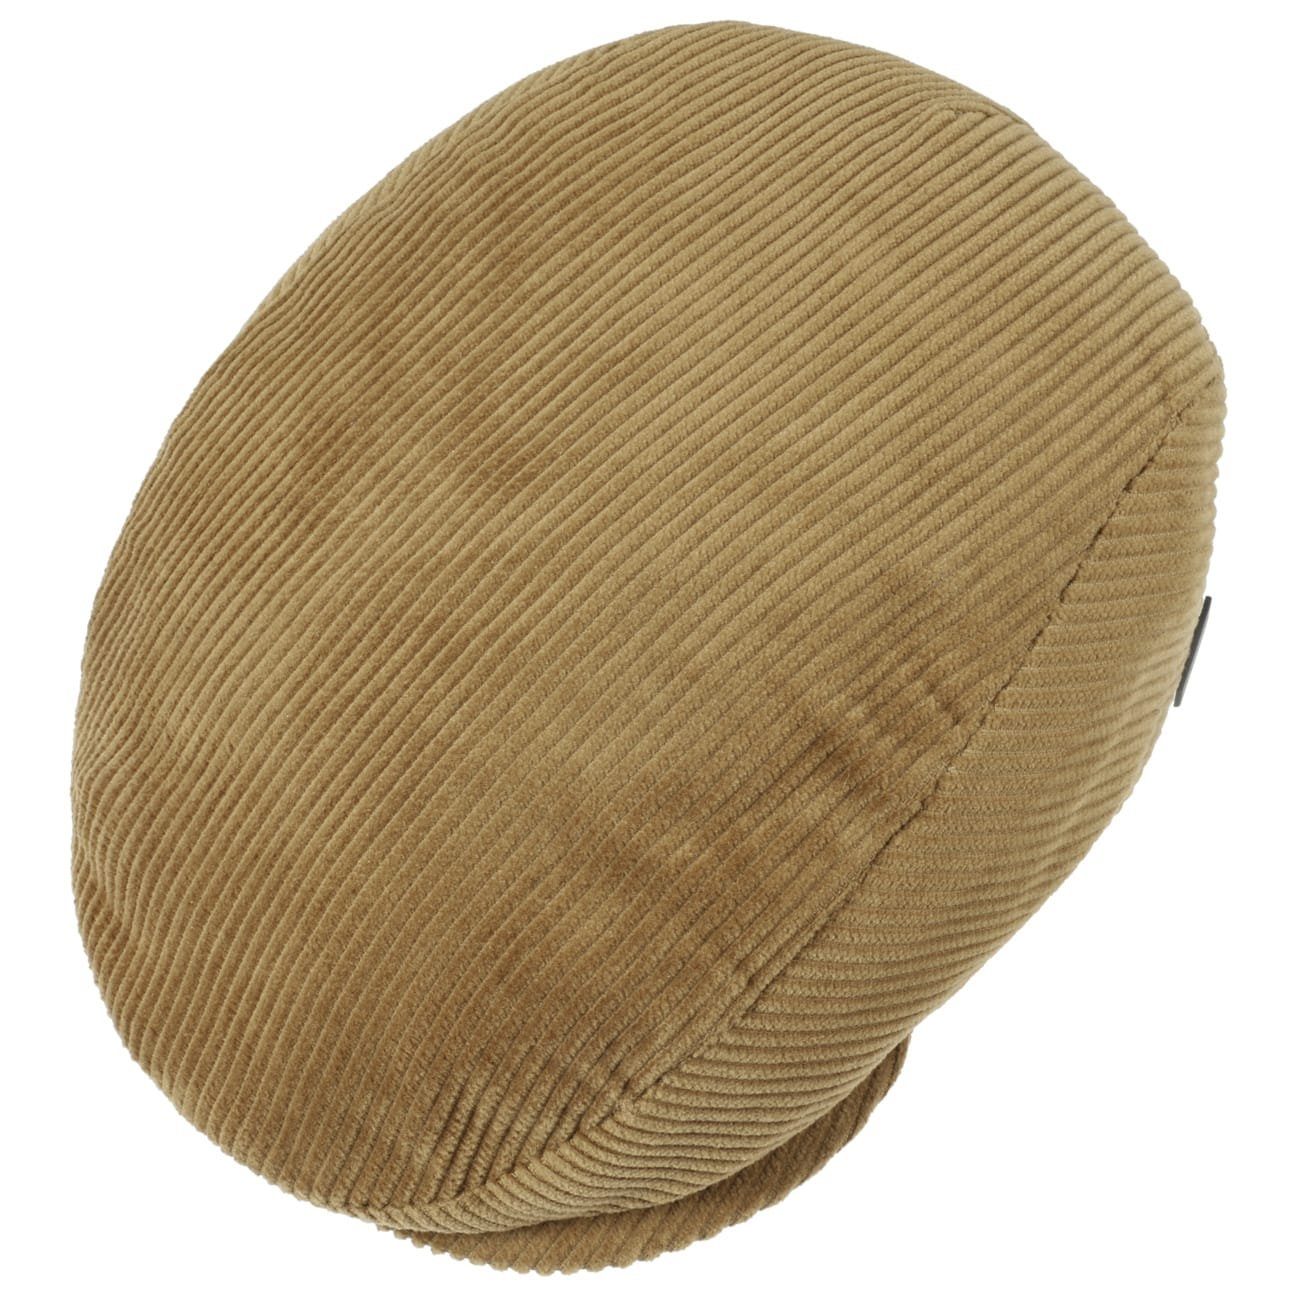 Schirm, in (1-St) Lipodo dunkelbeige Made Italy Baumwollcap Cap mit Flat